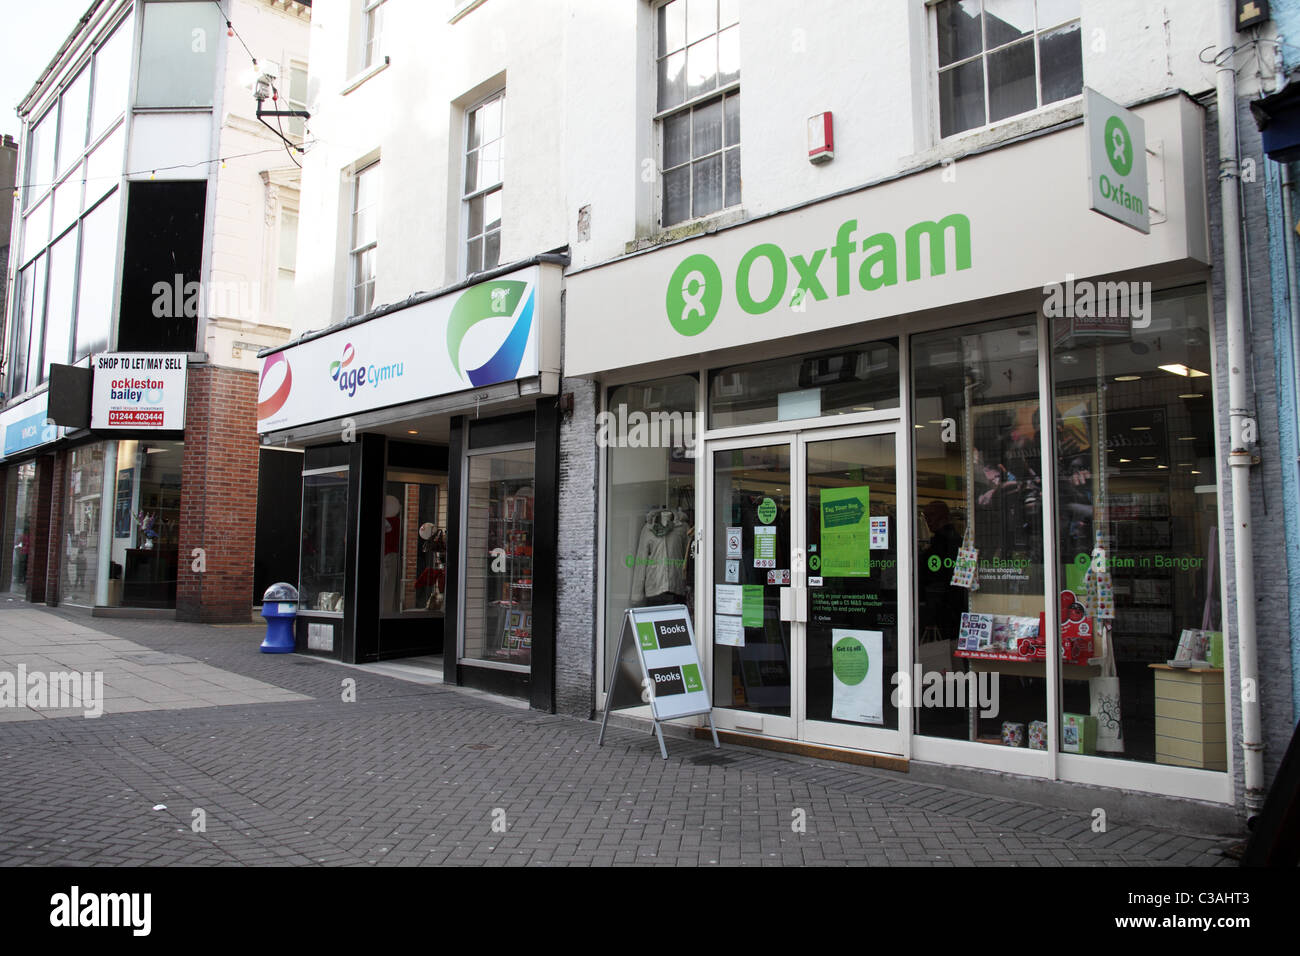 Adjacent Charity Shops, Age Cymru and Oxfam, Bangor High Street, Wales Stock Photo